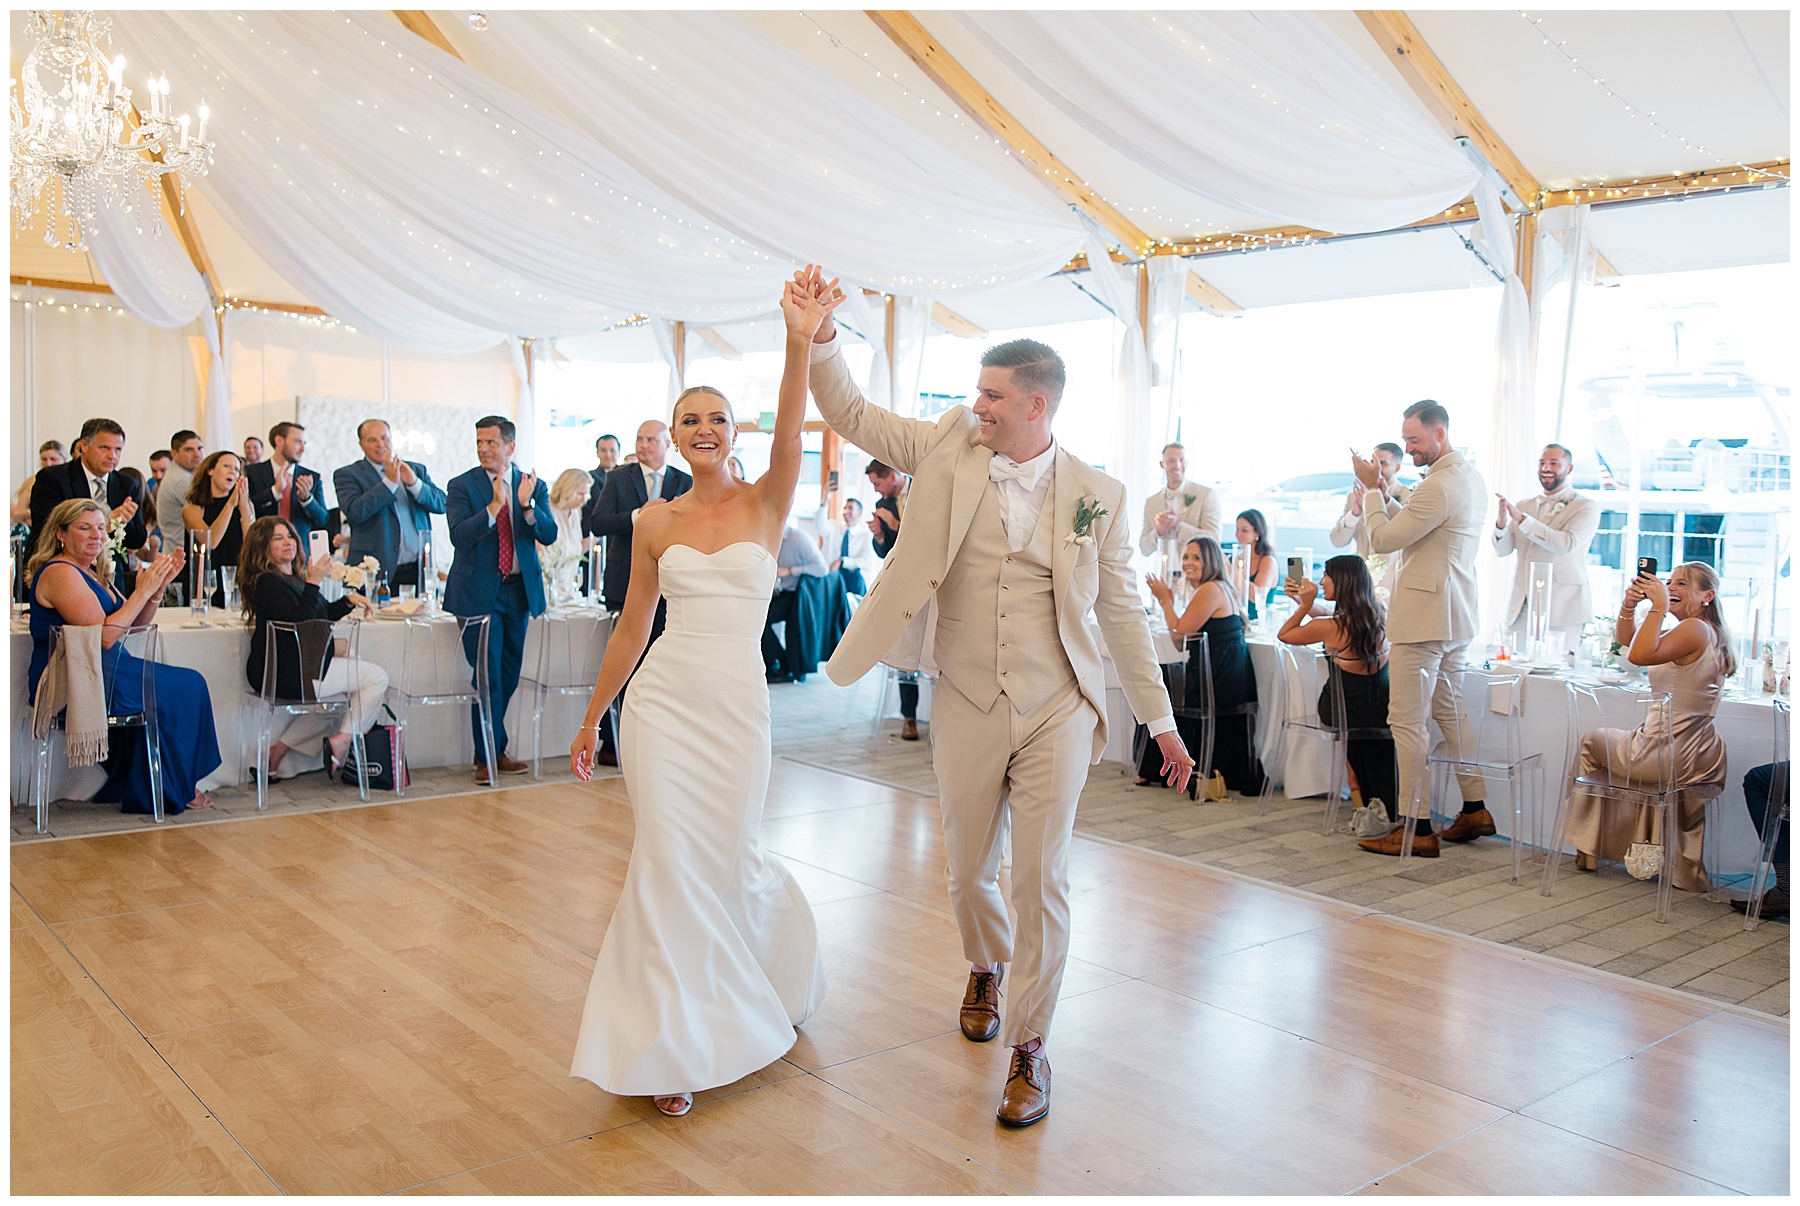 newlyweds enter the dance floor